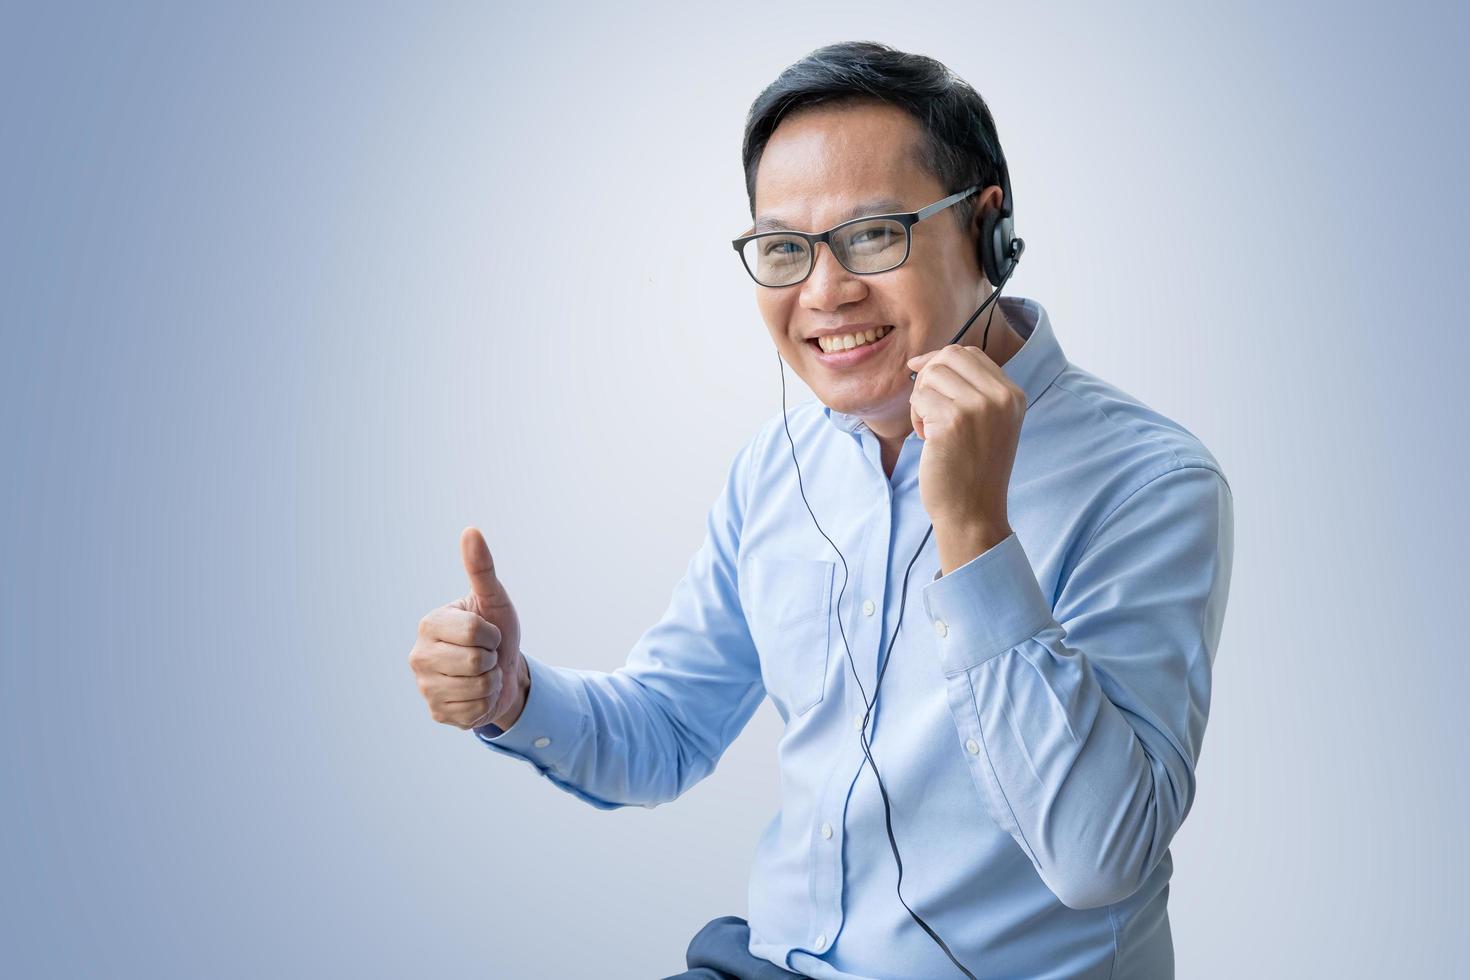 mens die op middelbare leeftijd vraag op hoofdtelefoon neemt die op blauwe achtergrond wordt geïsoleerd foto